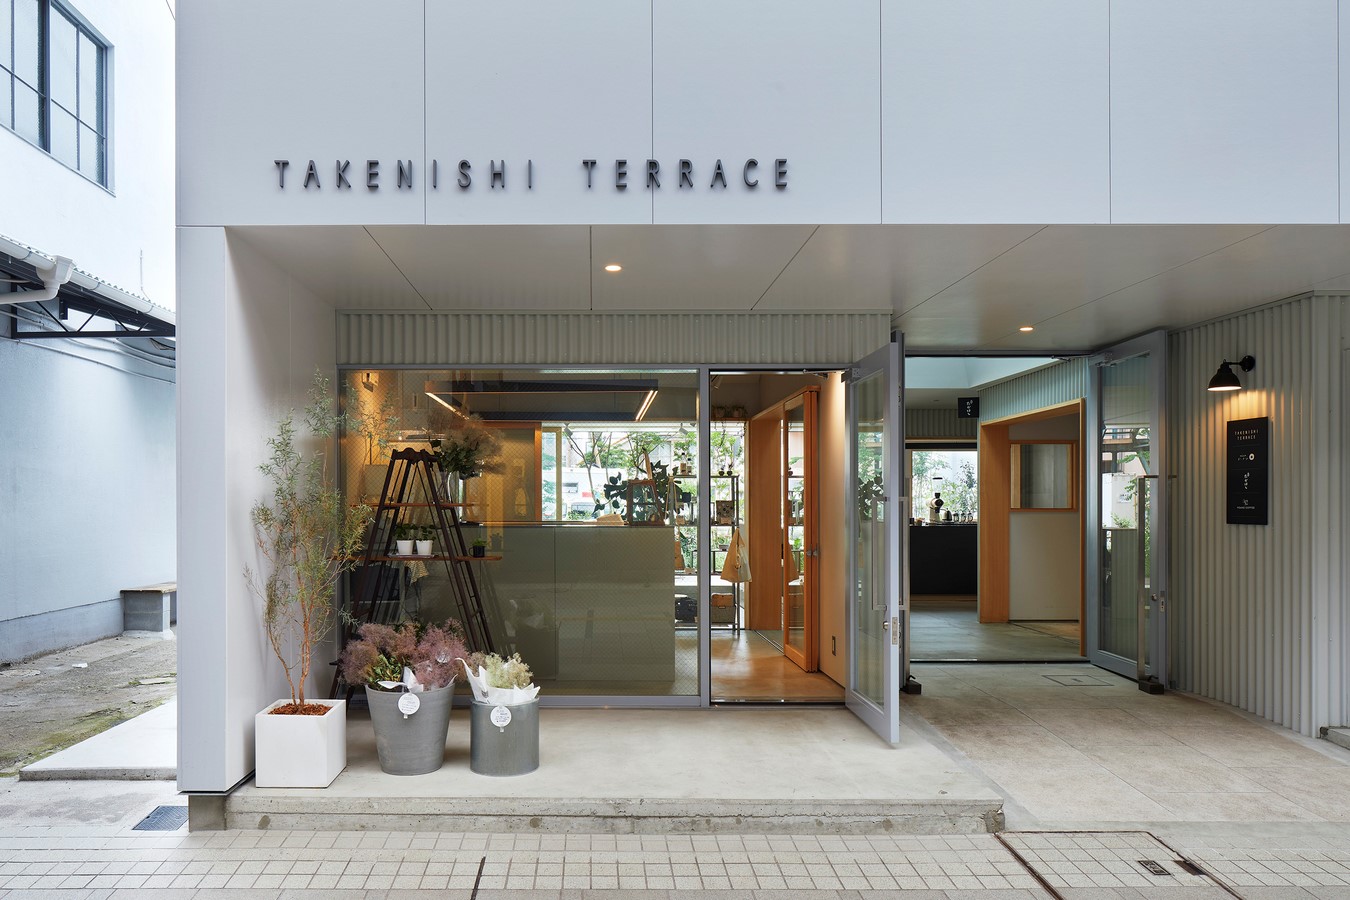 Takenishi Terrace by Yuuki Tanaka / YRAD - Sheet6